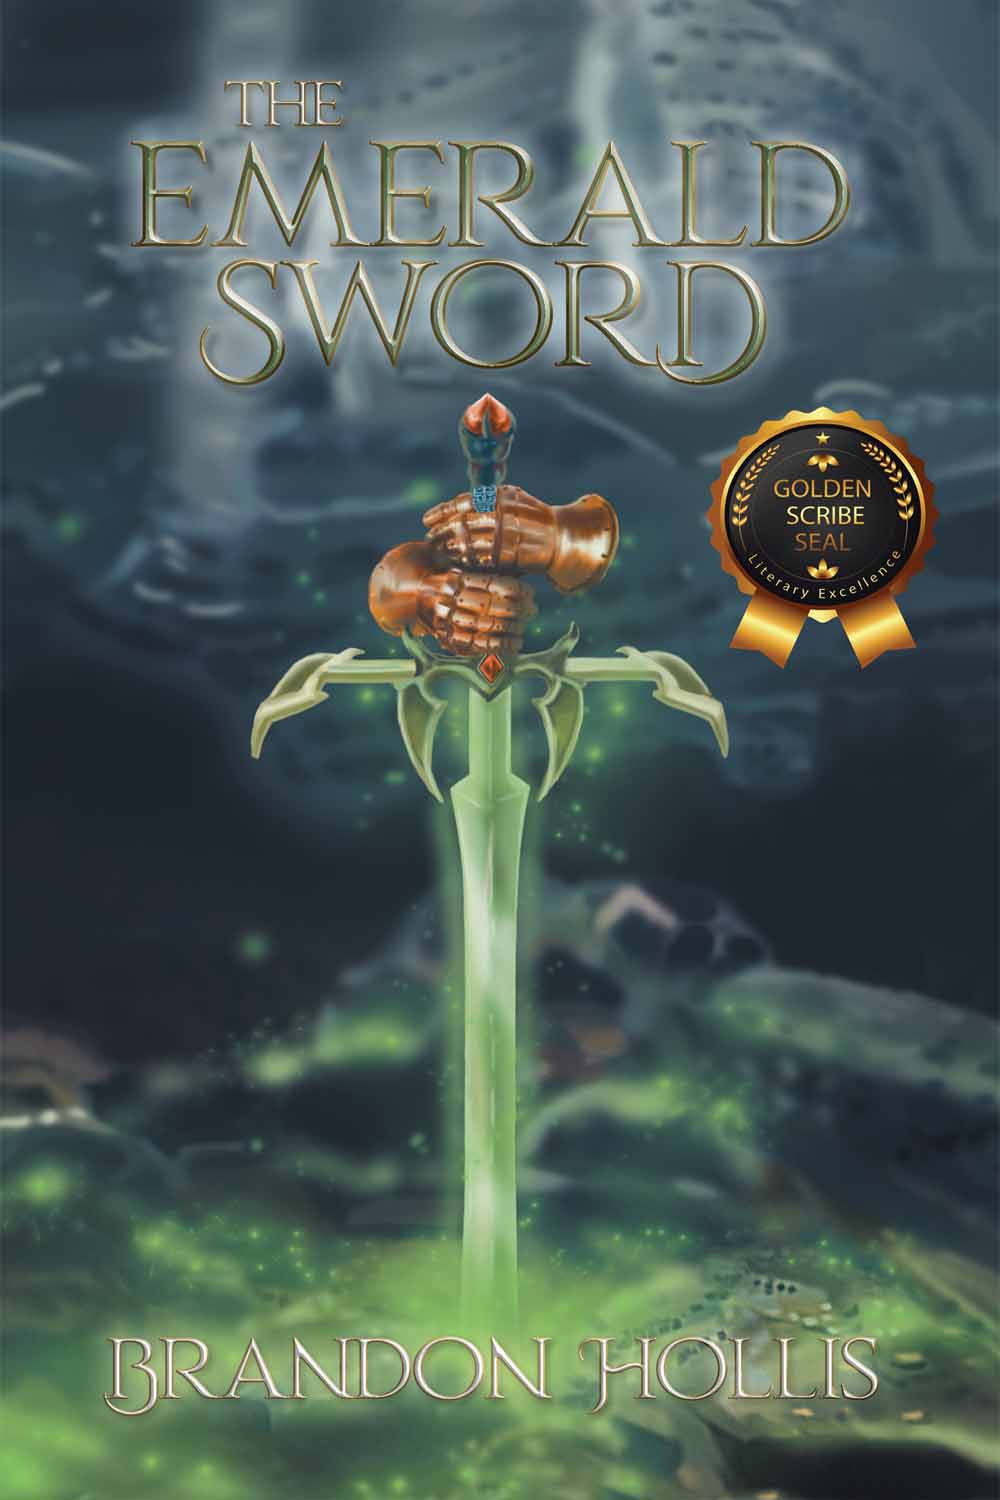 The Emerald Sword by Brandon Hollis